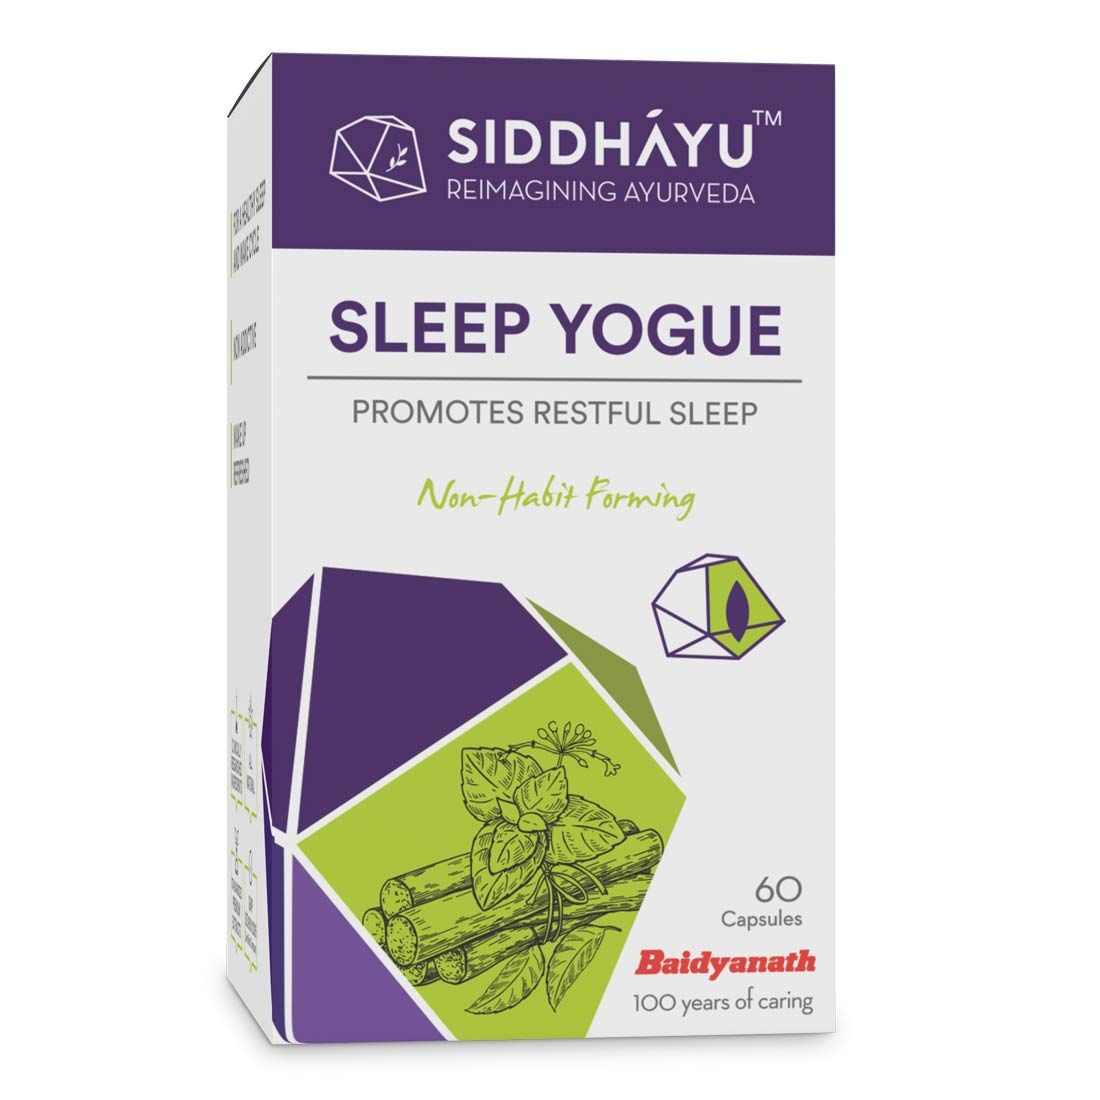 Siddhayu Sleep Yogue for Restful Sleep, 60 Capsules, Pack of 1 